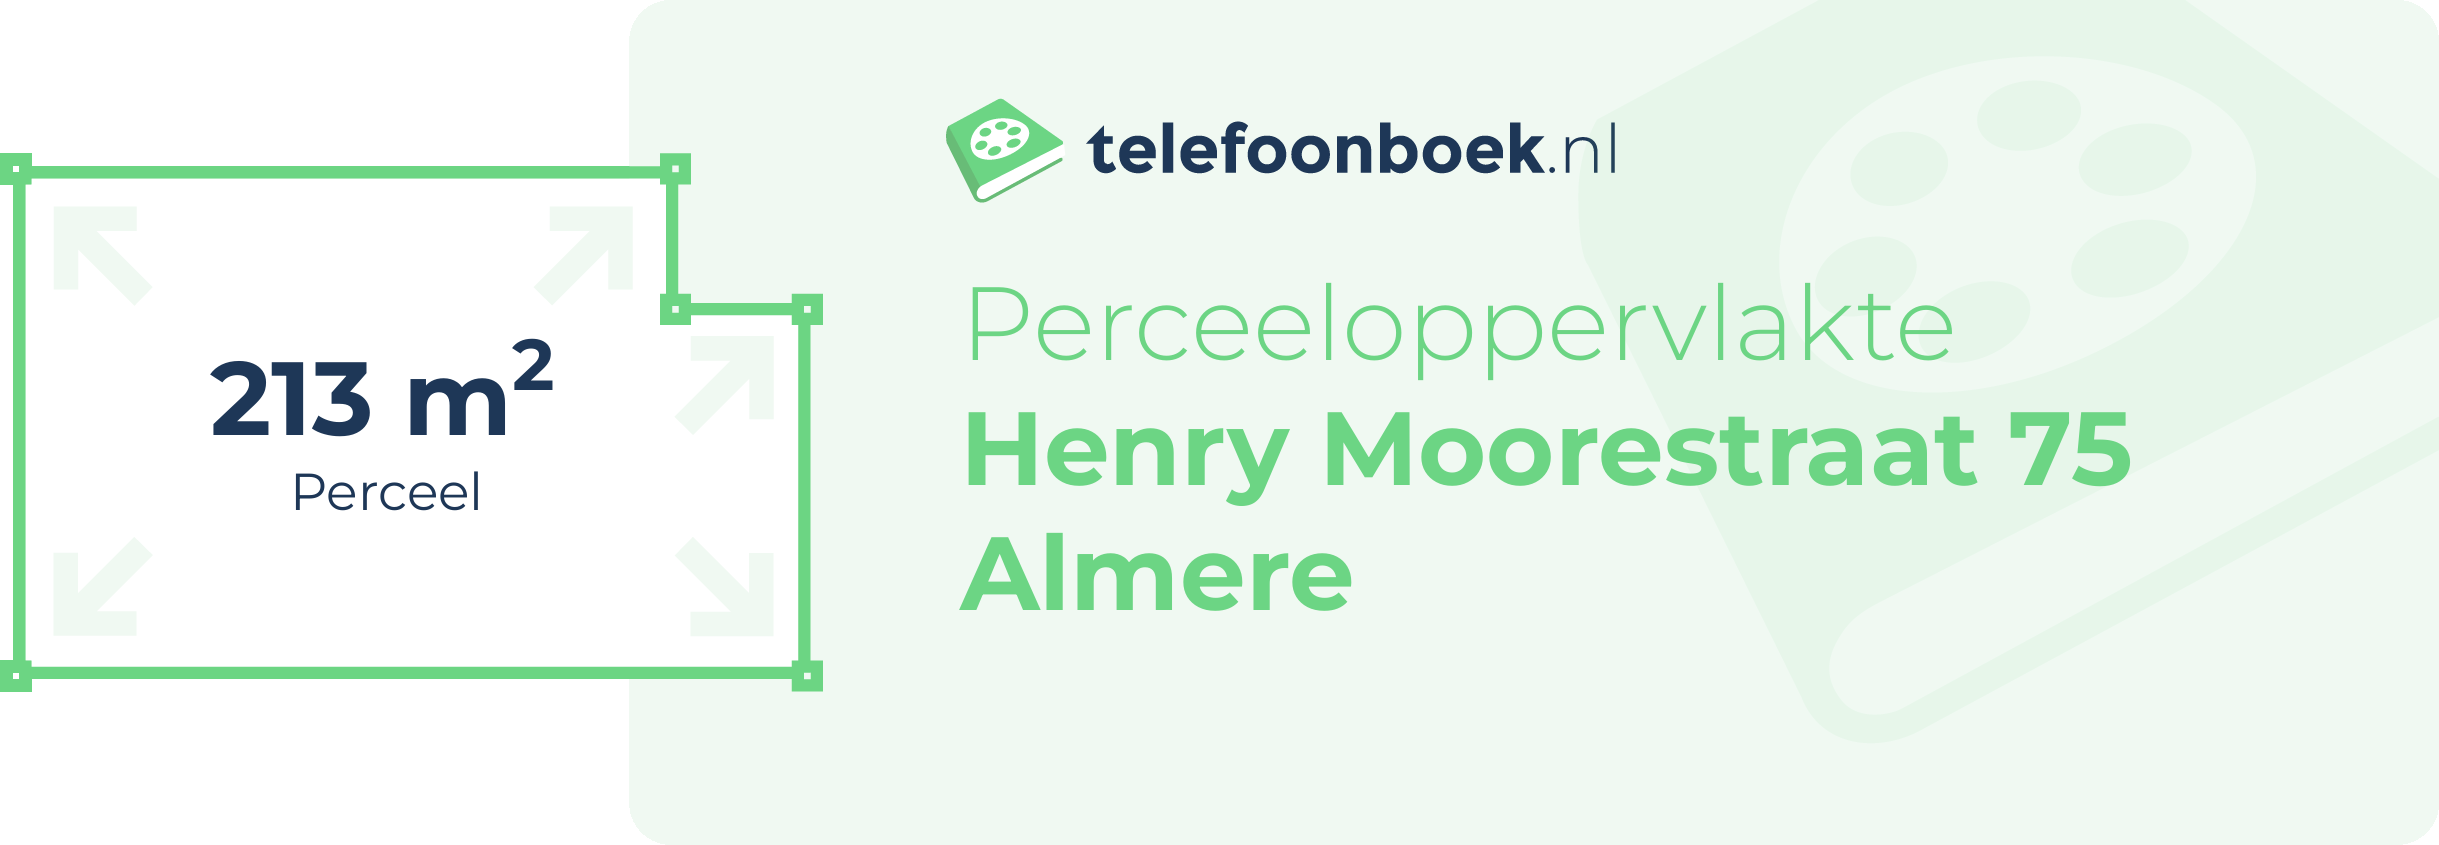 Perceeloppervlakte Henry Moorestraat 75 Almere